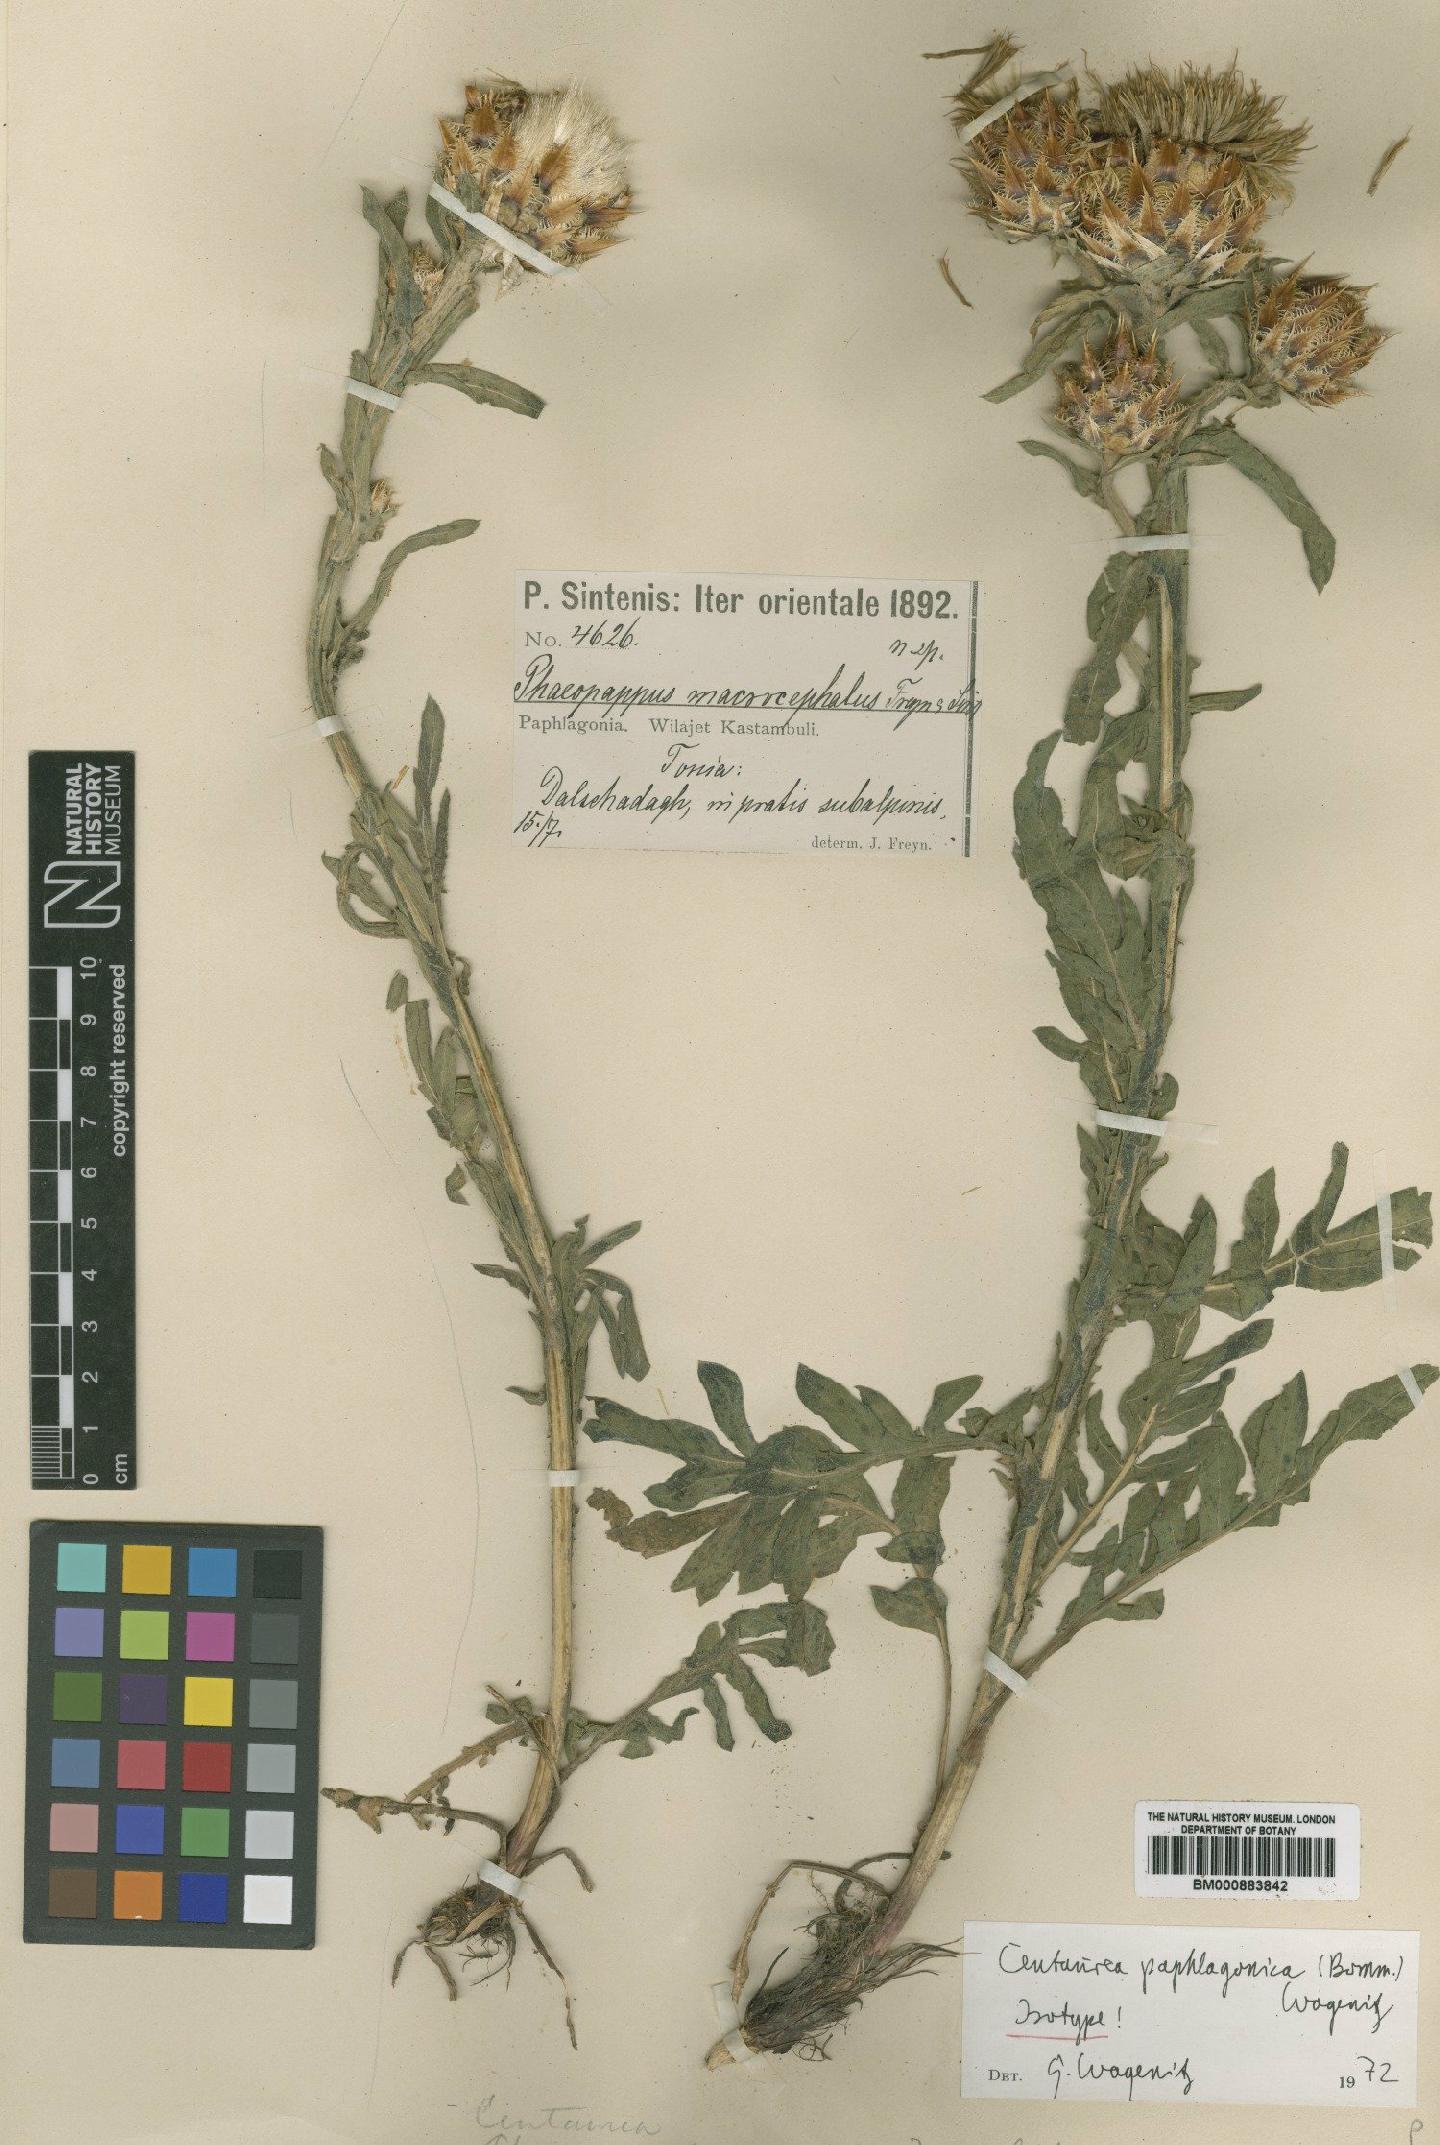 To NHMUK collection (Centaurea paphlagonica (Bornm) Wagenitz; Isotype; NHMUK:ecatalogue:4993775)